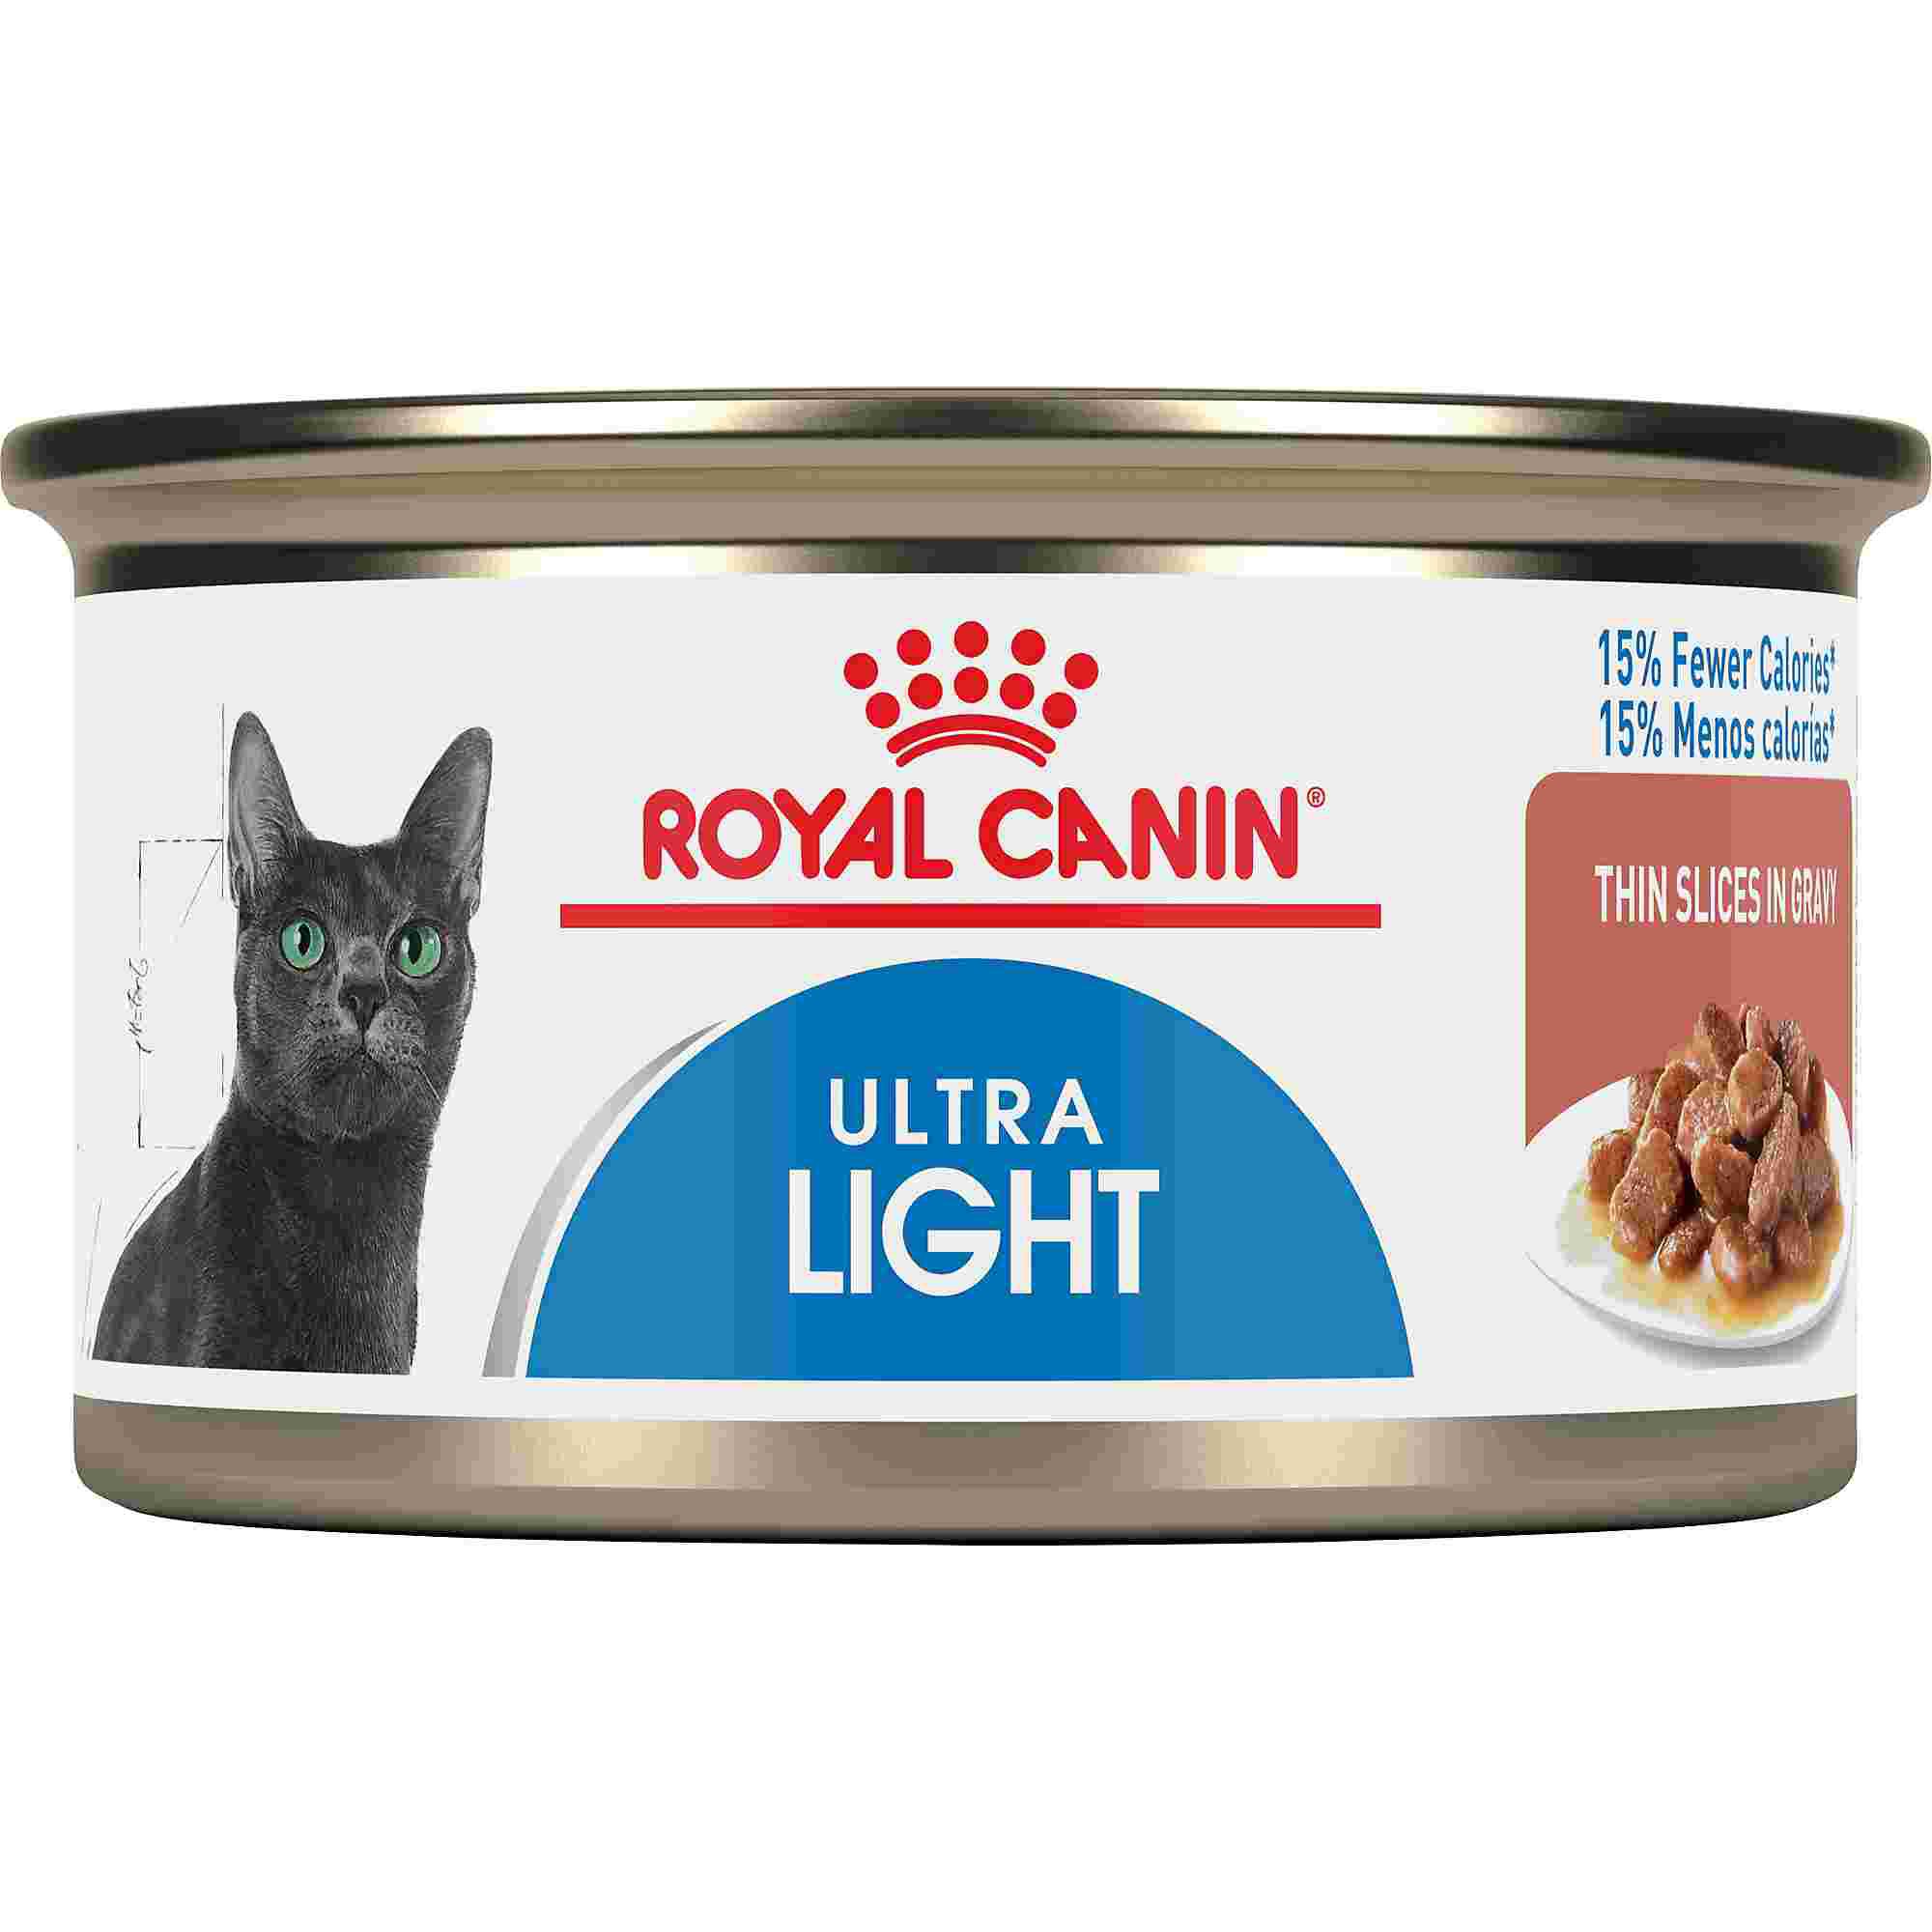 royal canin cat light